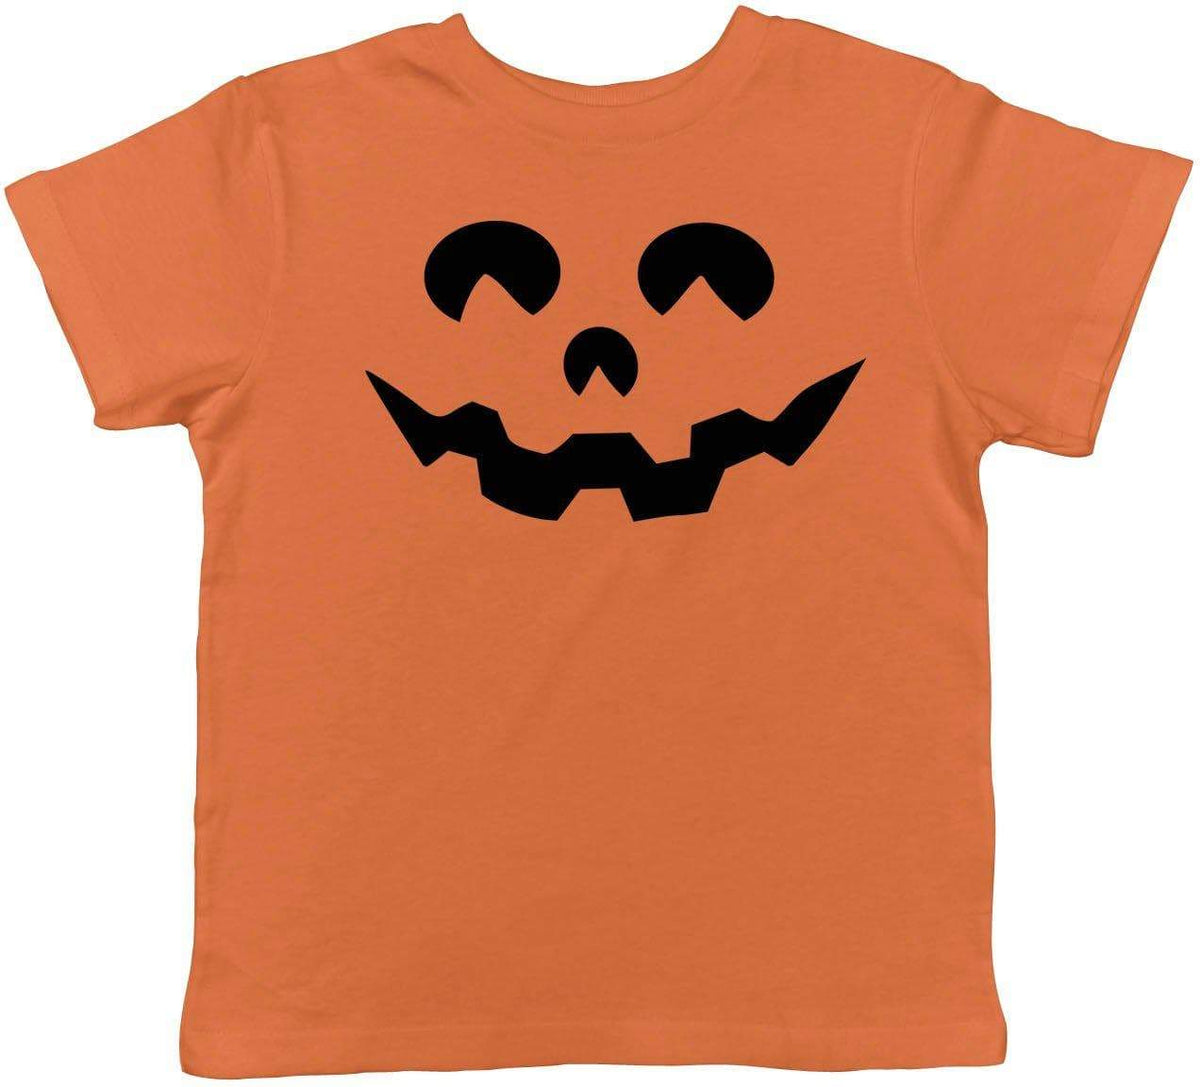 Cartoon Eyes Pumpkin Face Toddler Tshirt - Crazy Dog T-Shirts